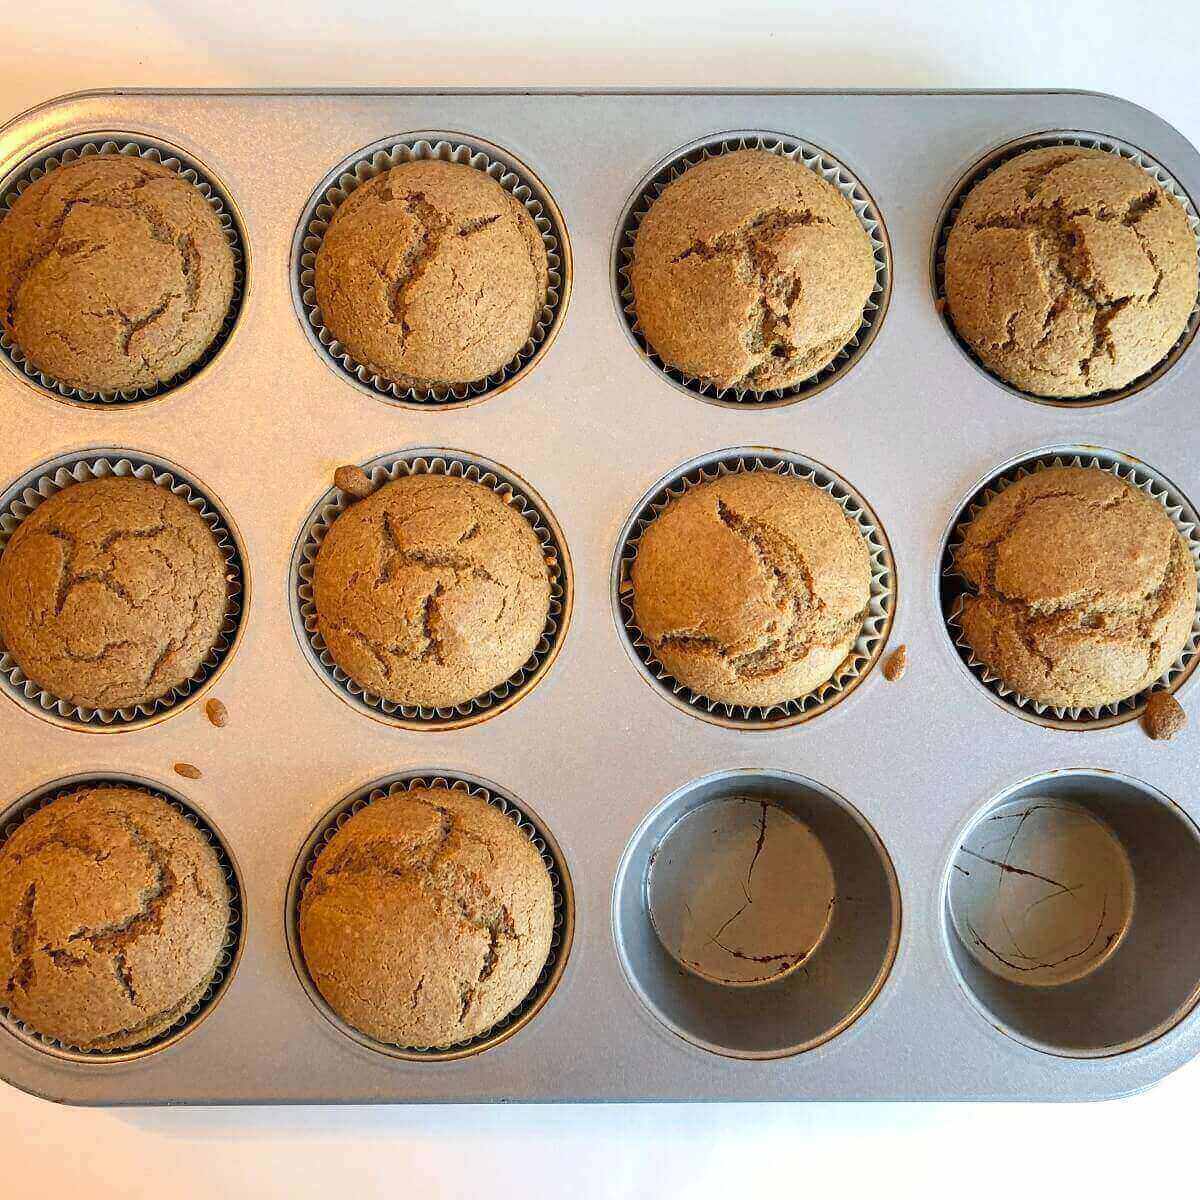 Ten muffins in a baking pan.